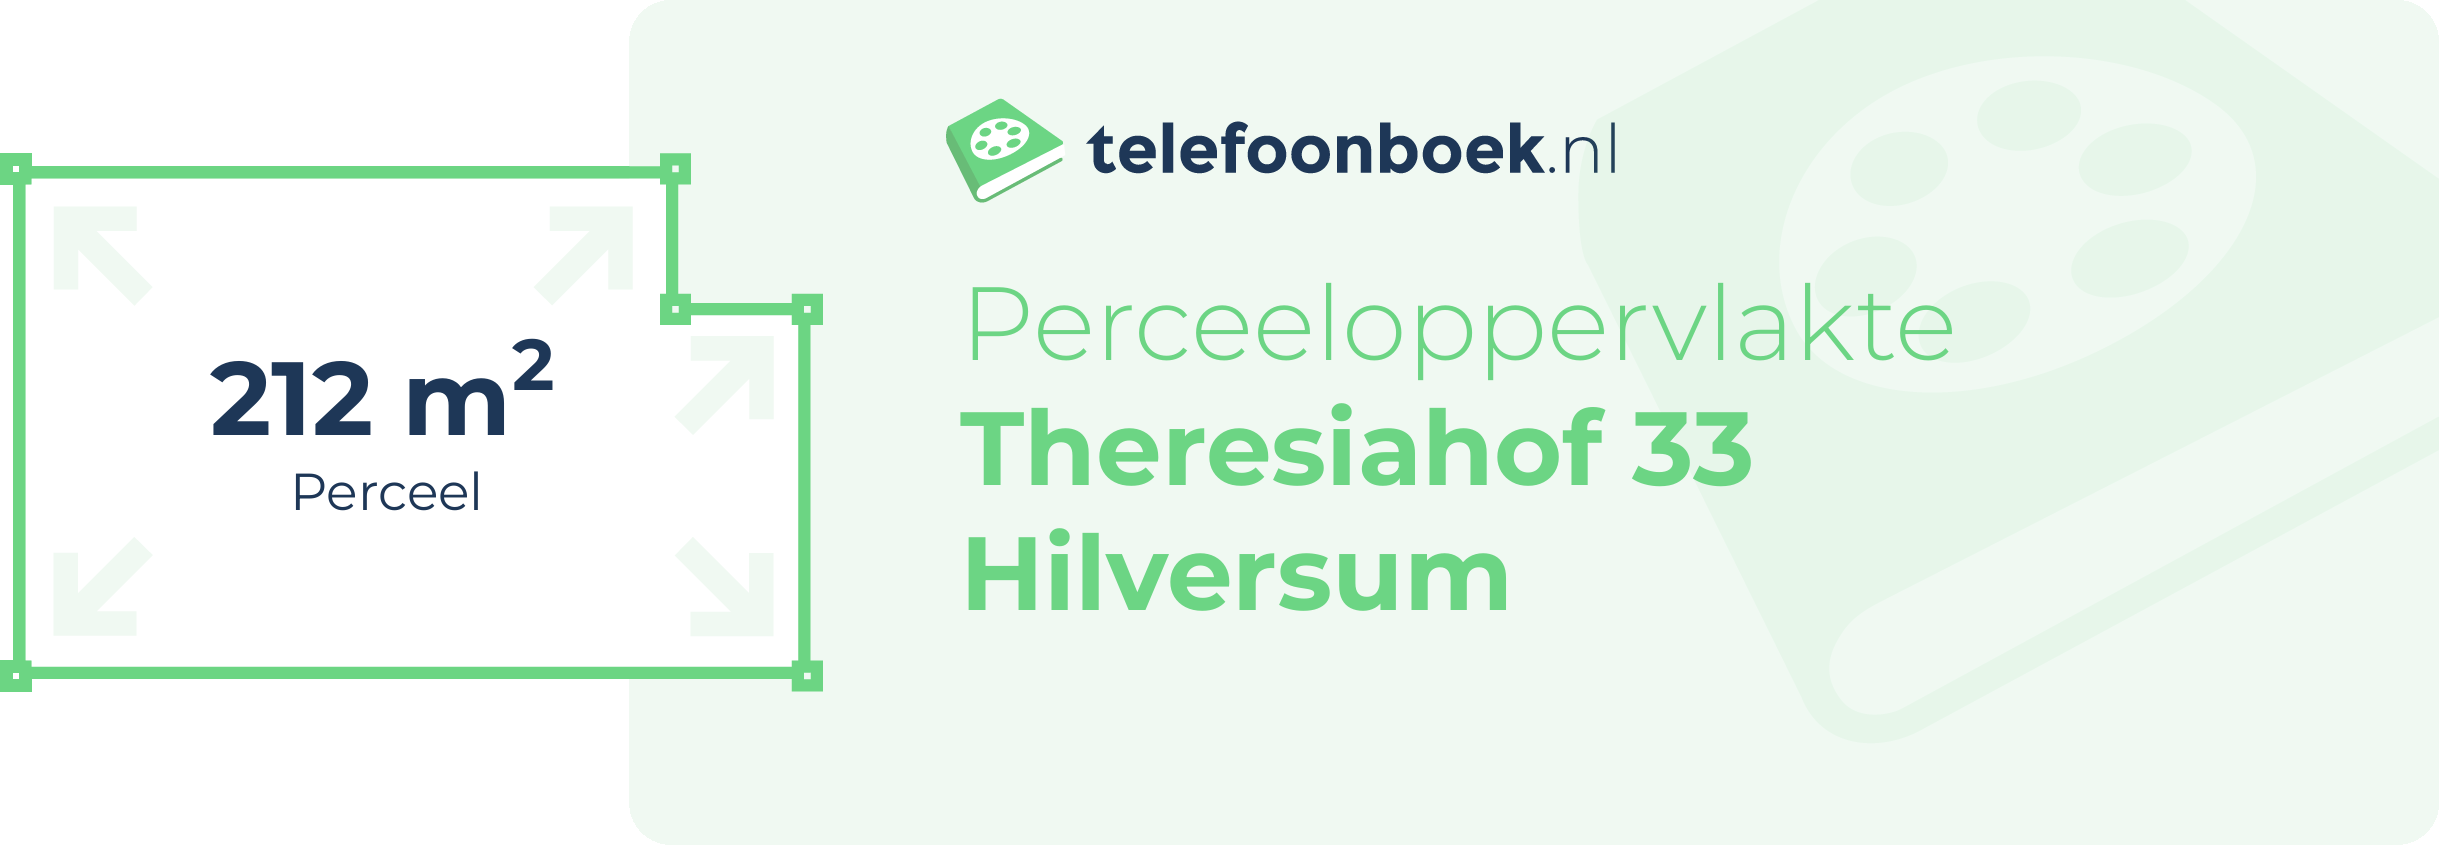 Perceeloppervlakte Theresiahof 33 Hilversum